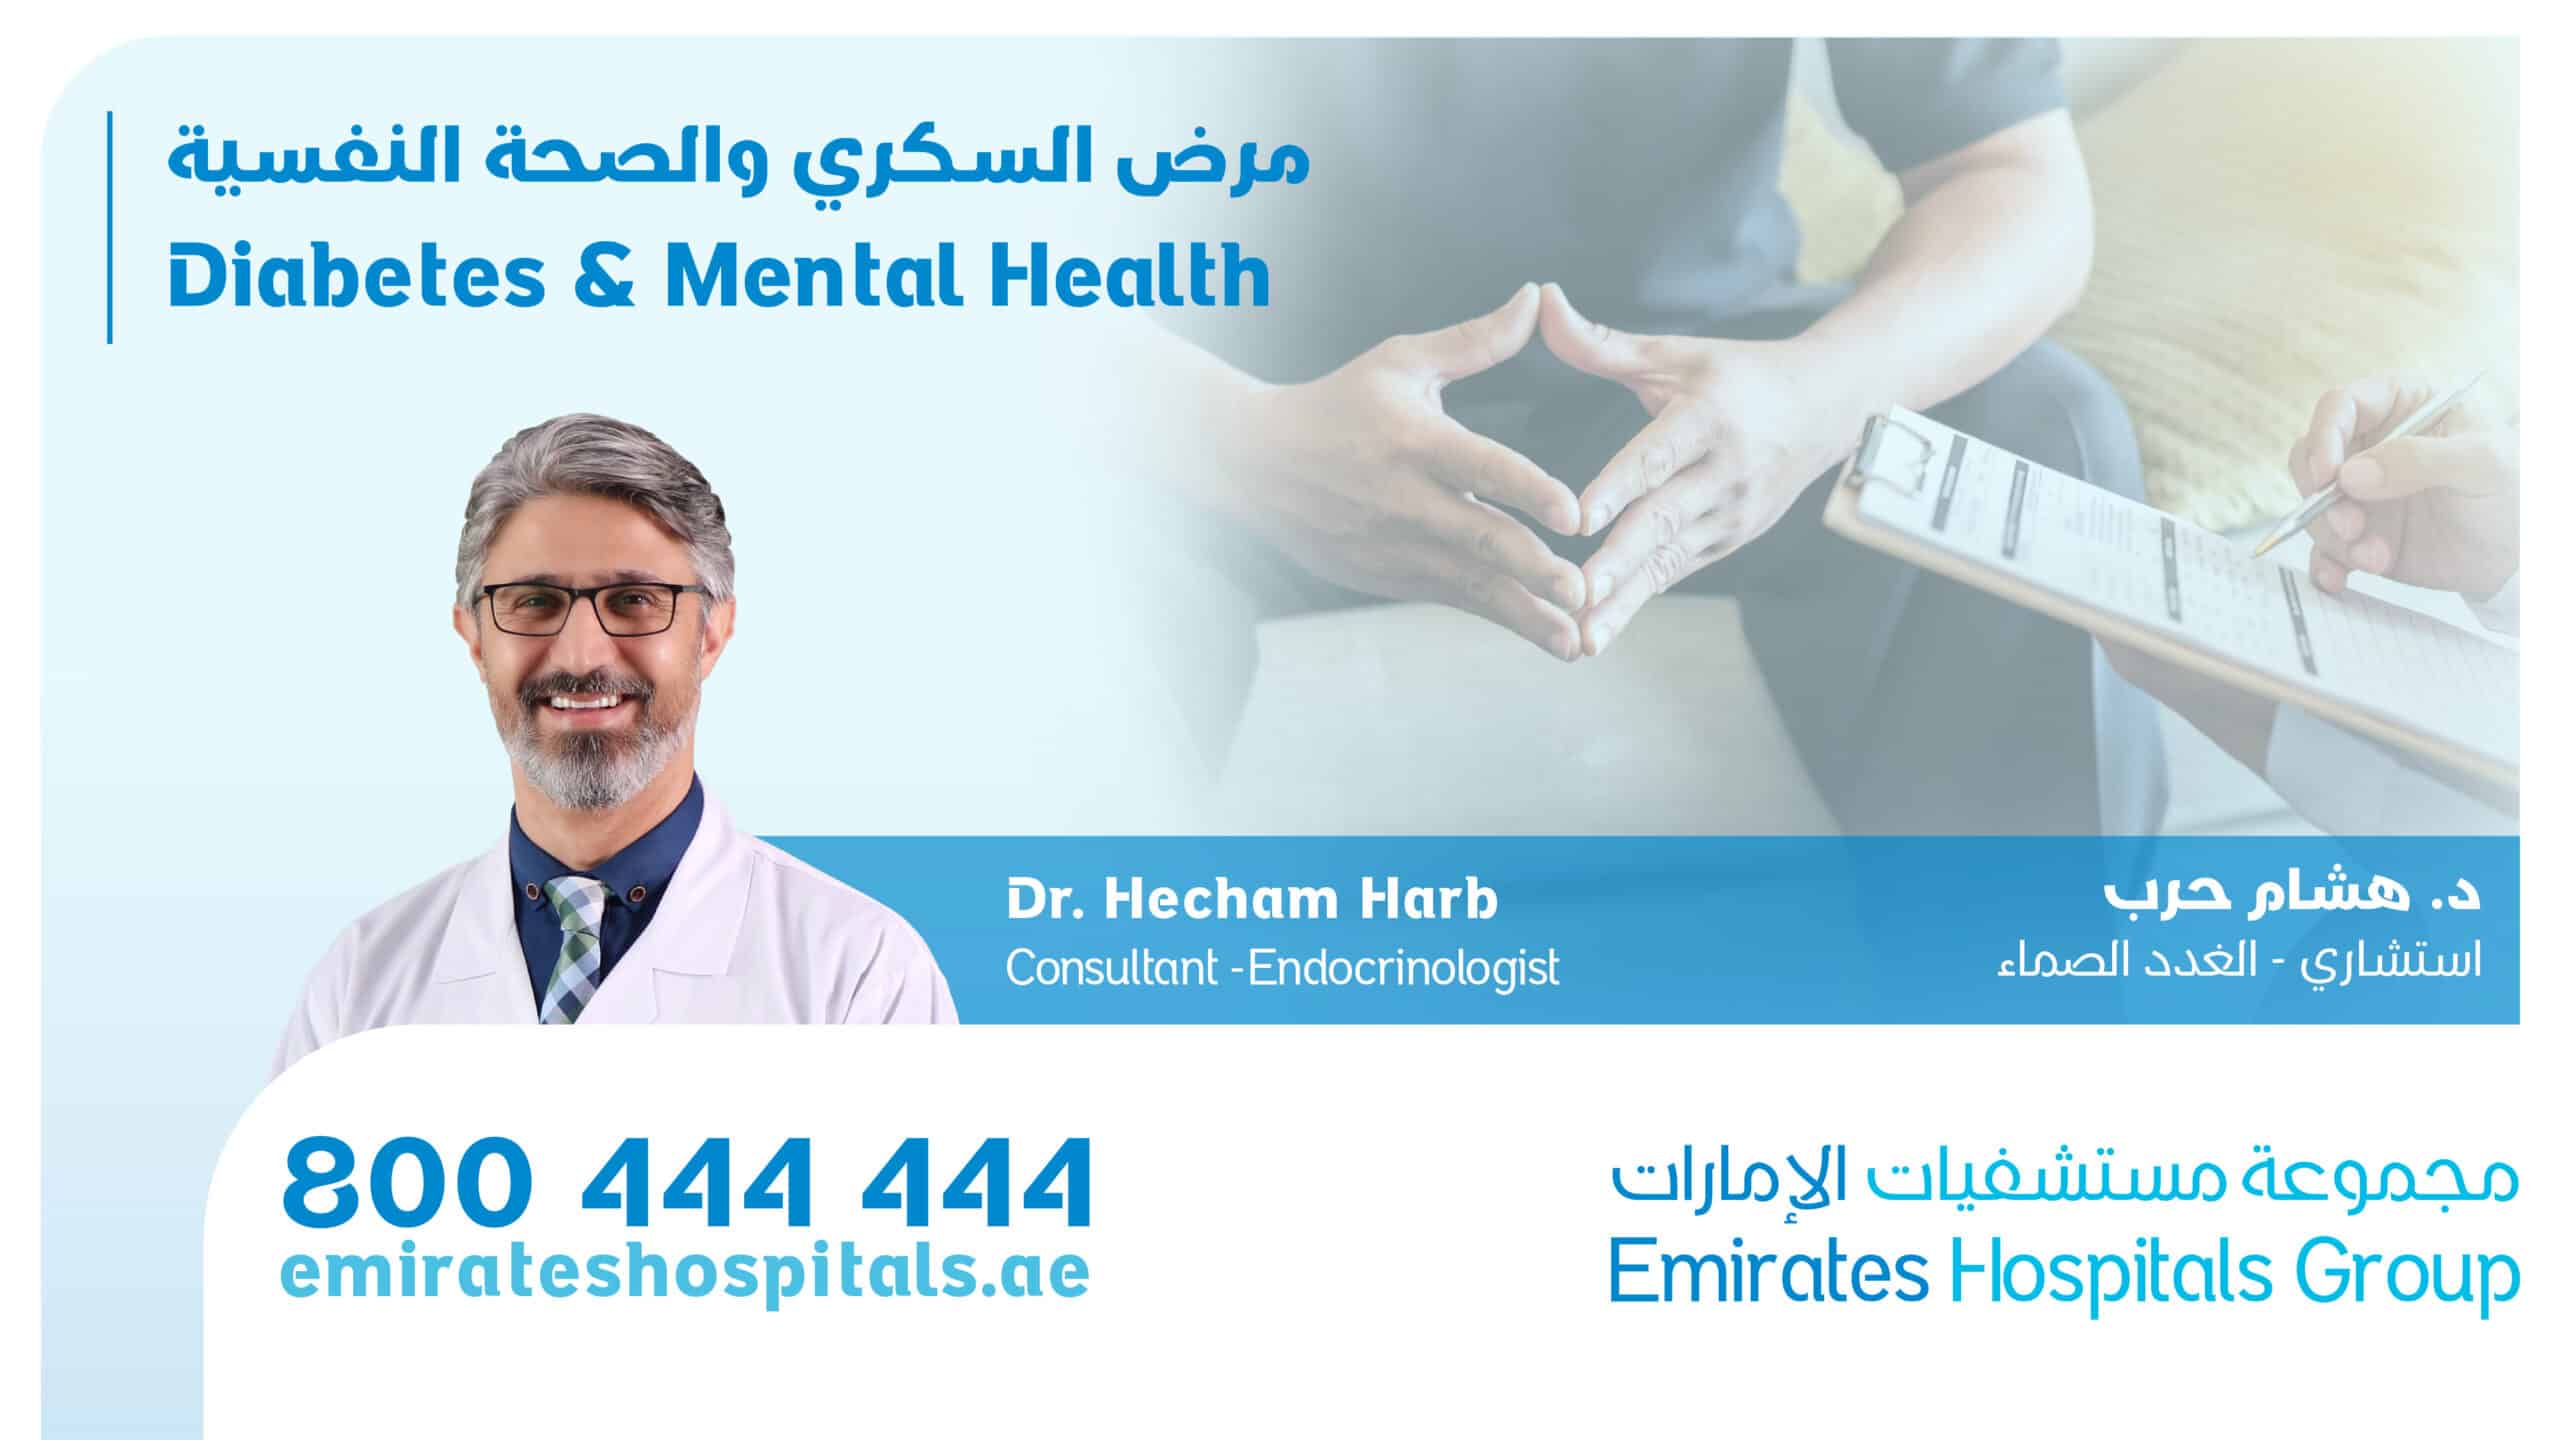 Diabetes & Mental Health - Dr. Hecham Harb , Consultant Endocrinologist